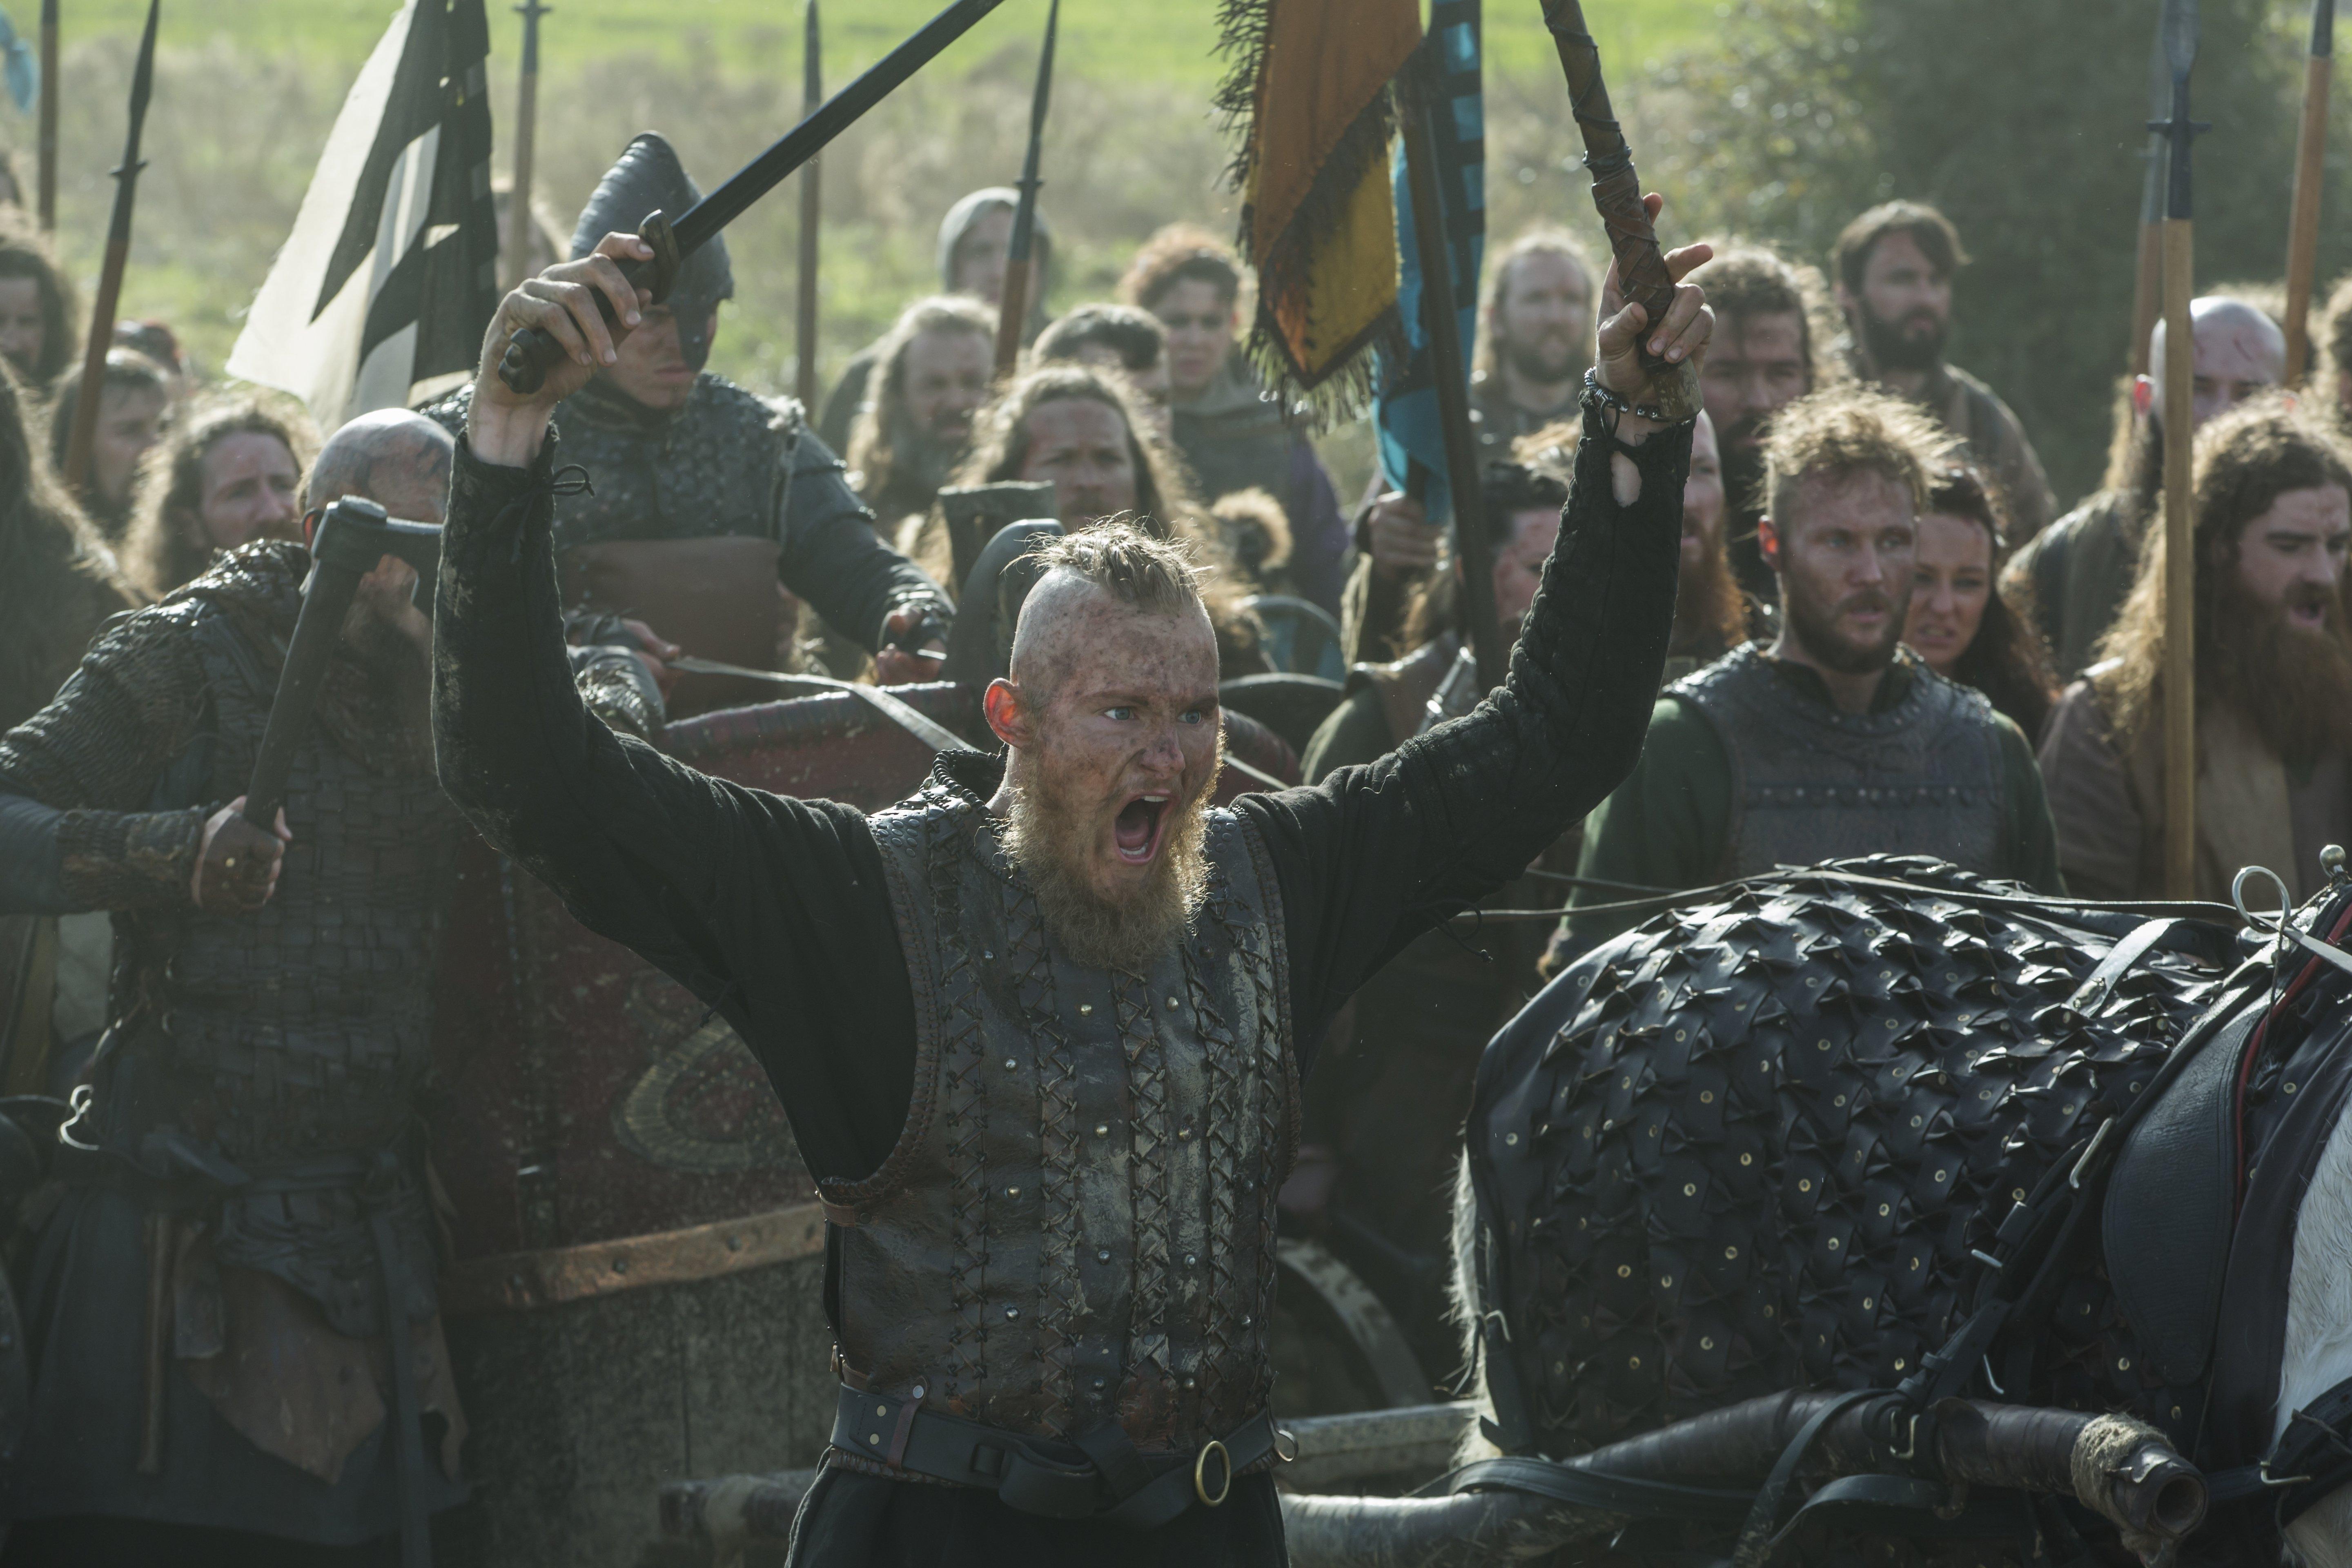 Download 5760x3840 Ragnar, Vikings, Armor, Weapons, Tv Series